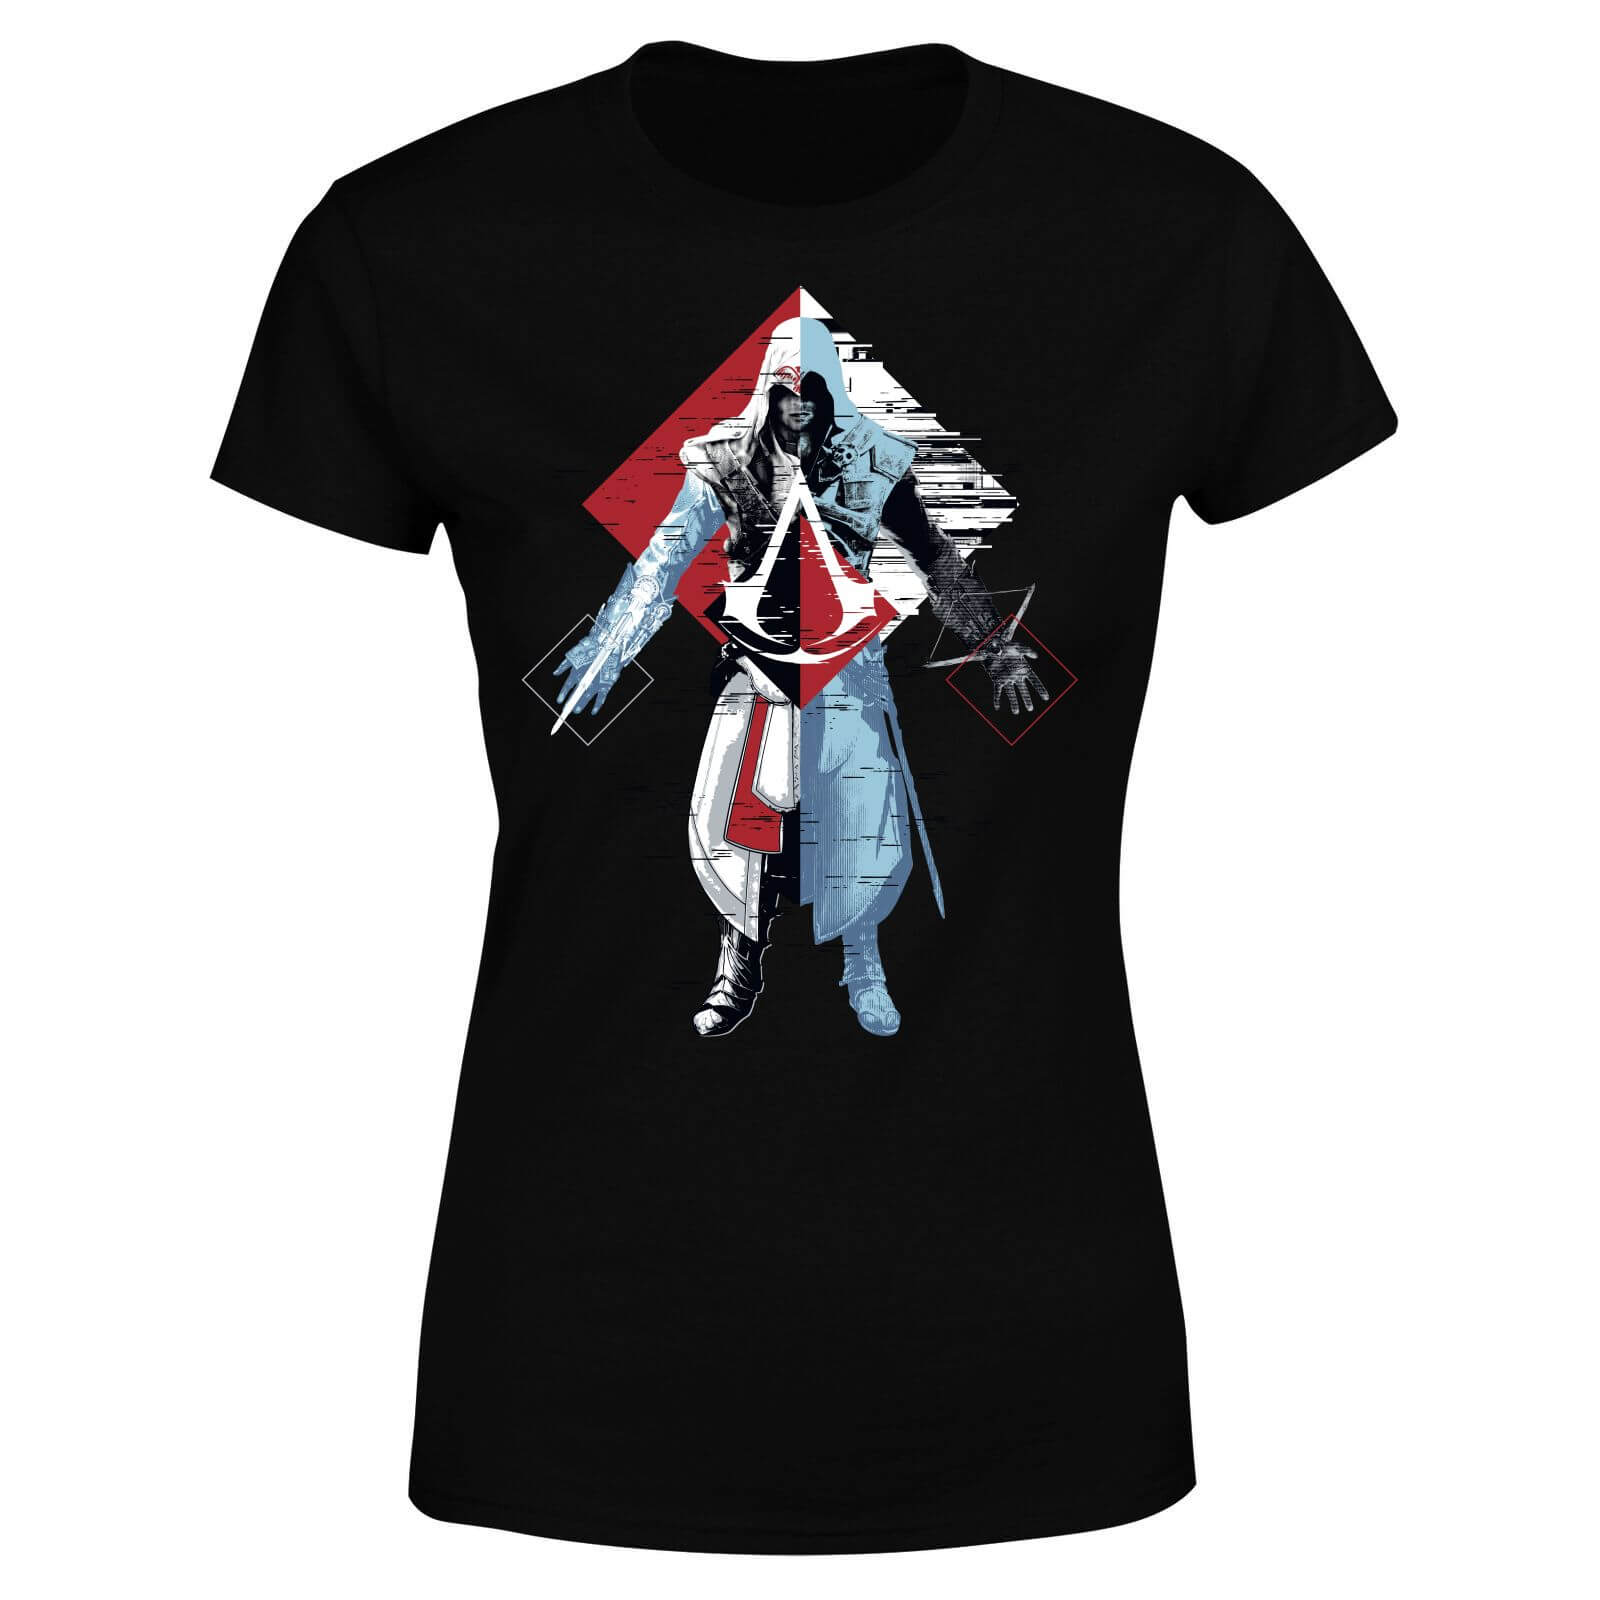 Assassin's Creed Animus Split Women's T-Shirt - Black - S - Black